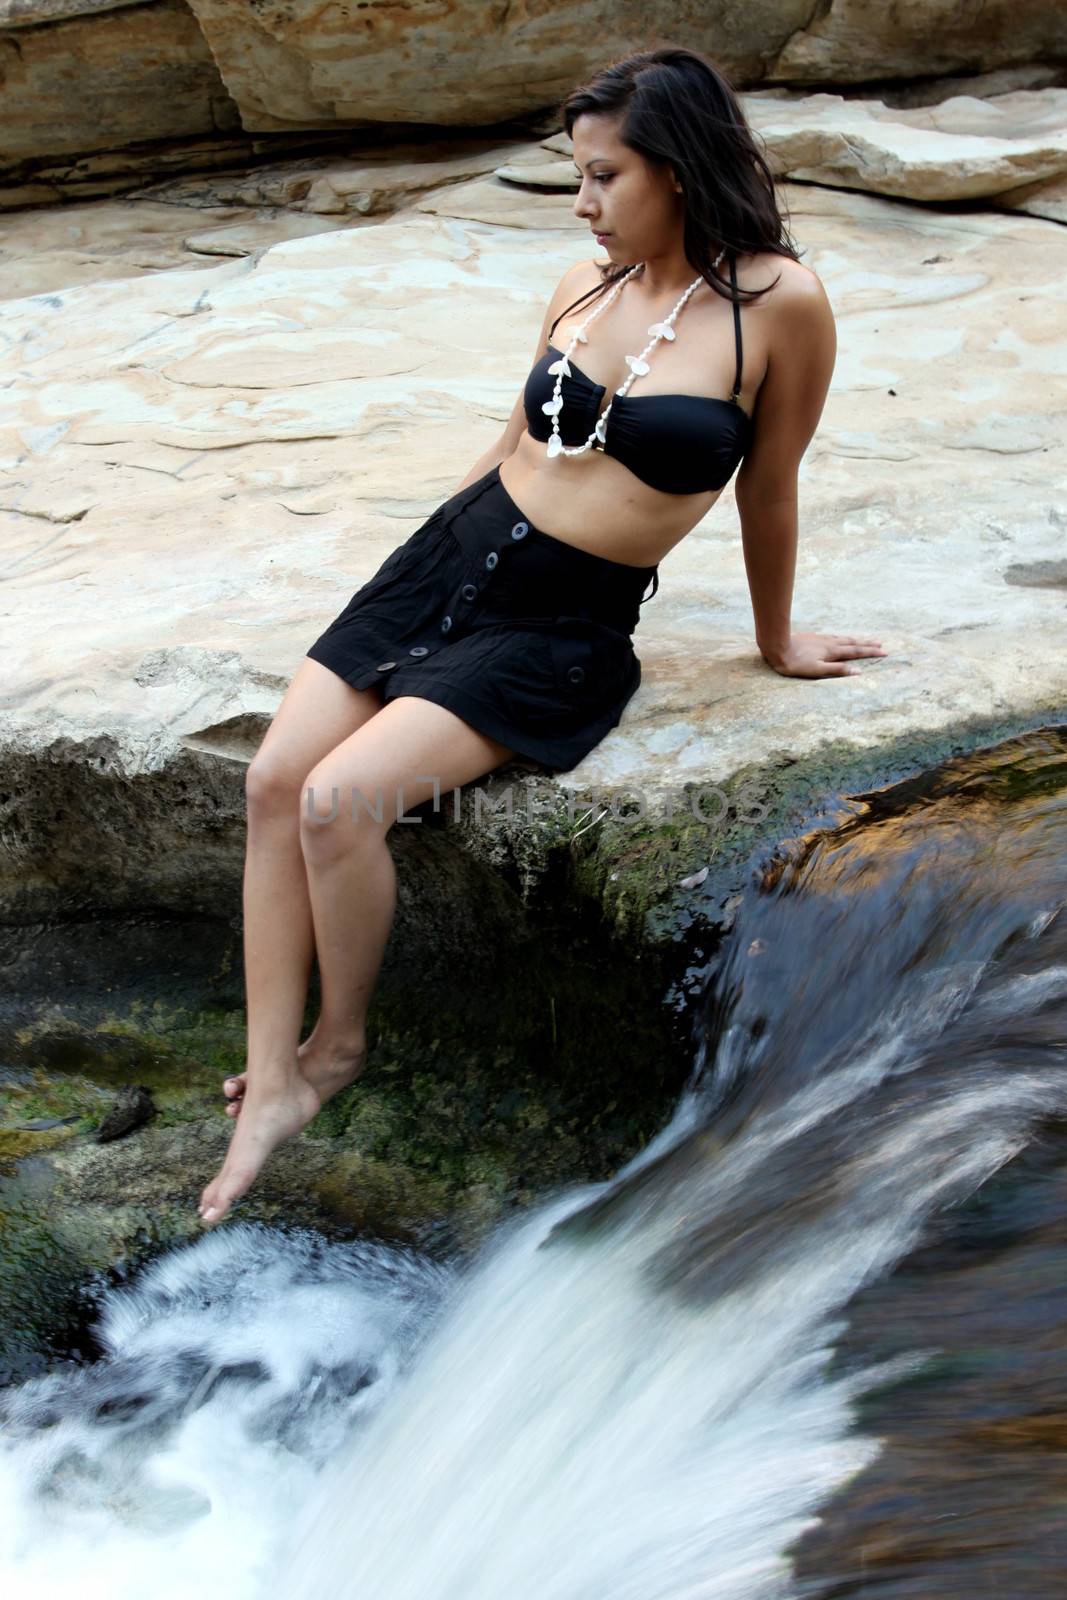 Hispanic woman with bikini sitting next to a waterfall.